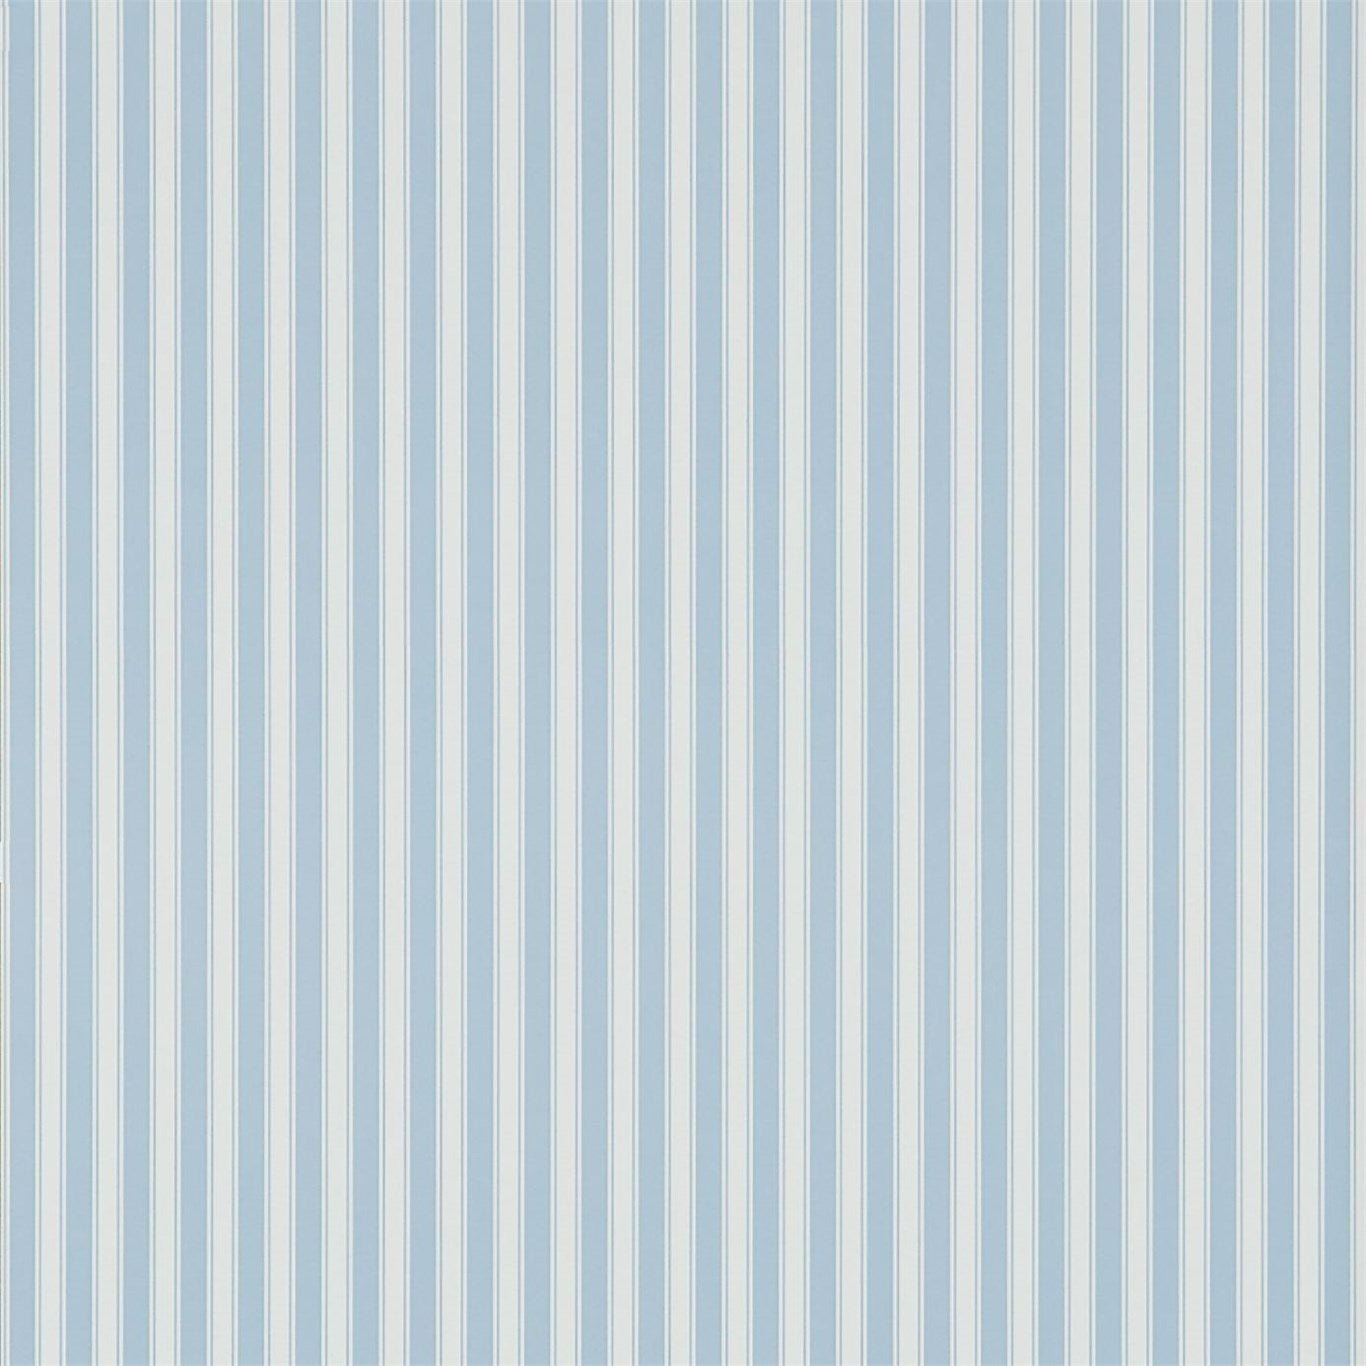 New Tiger Stripe Wallpaper - Blue/Ivory - DCAVTP106 - Sanderson - One Sixty - Morris Wallpaper